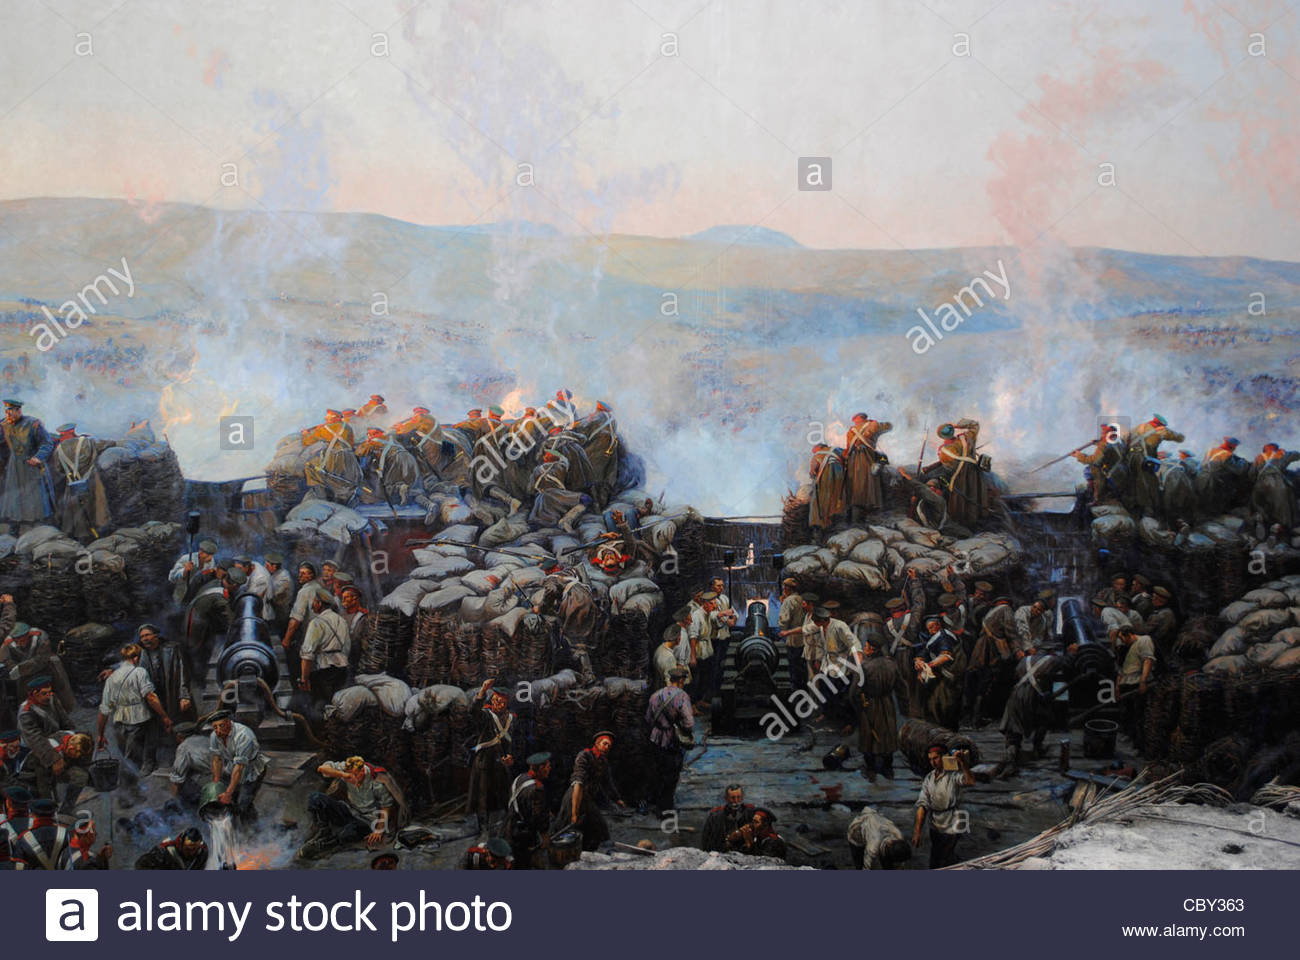 Nice wallpapers Siege Of Sevastopol 1300x960px